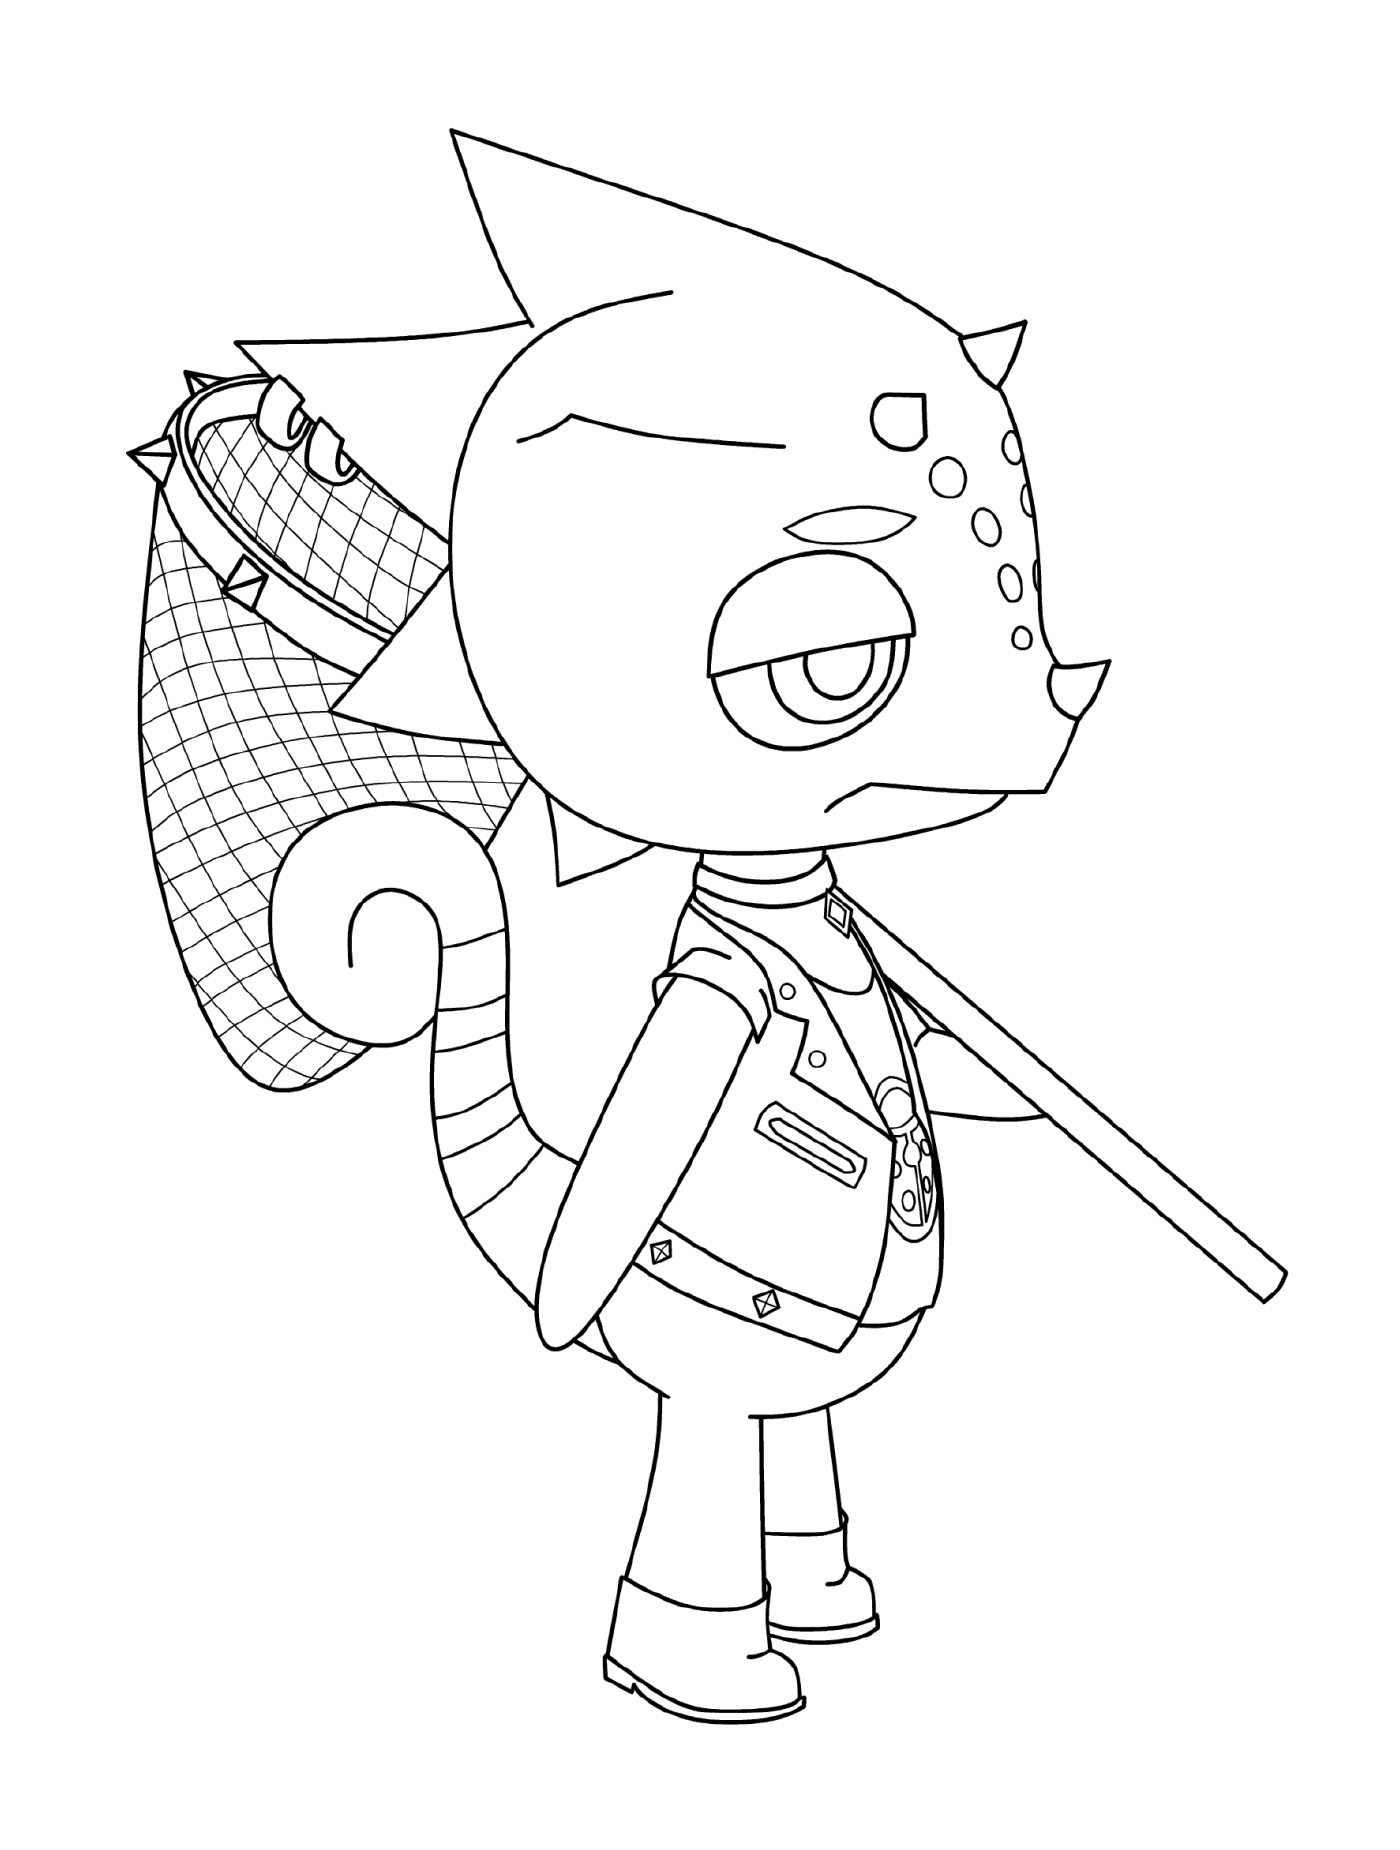  Animal Crossing Fan Art, animal with a baseball bat 